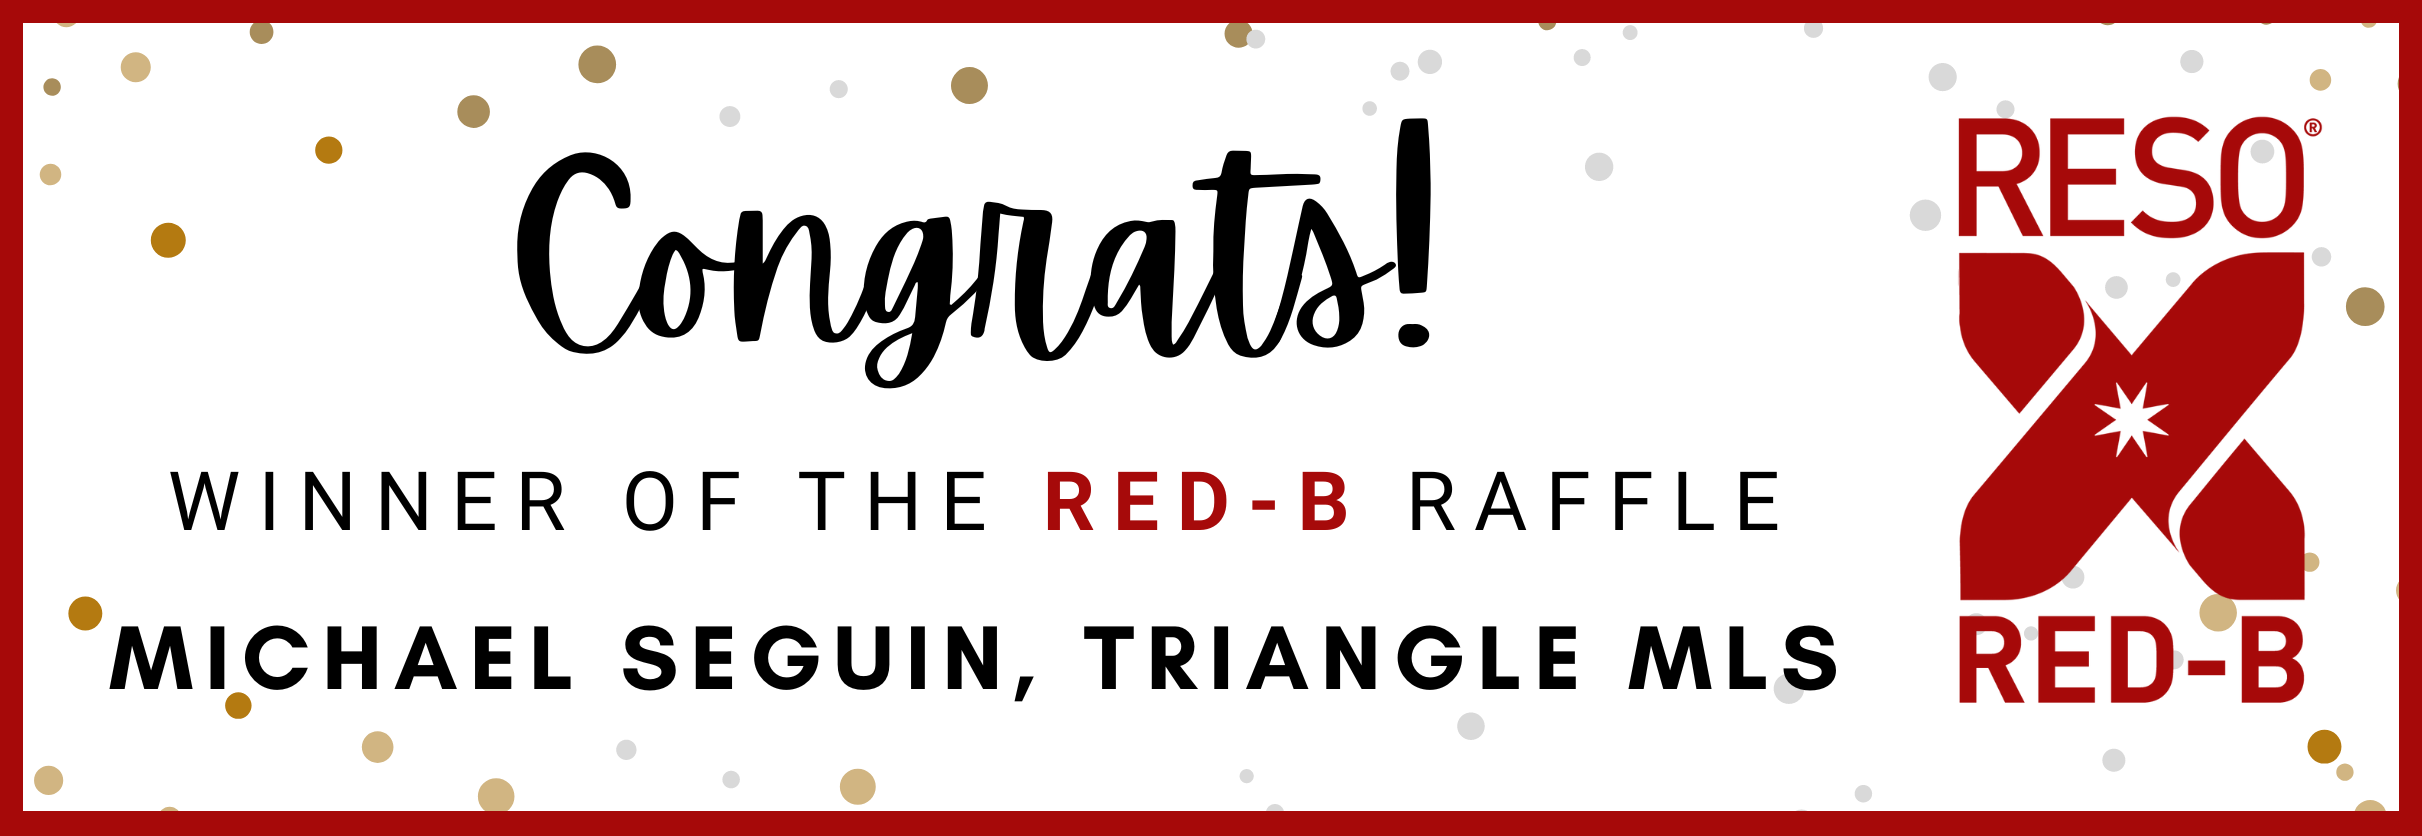 Congrats to RED-B raffle Winner Michael Seguin of Triangle MLS!